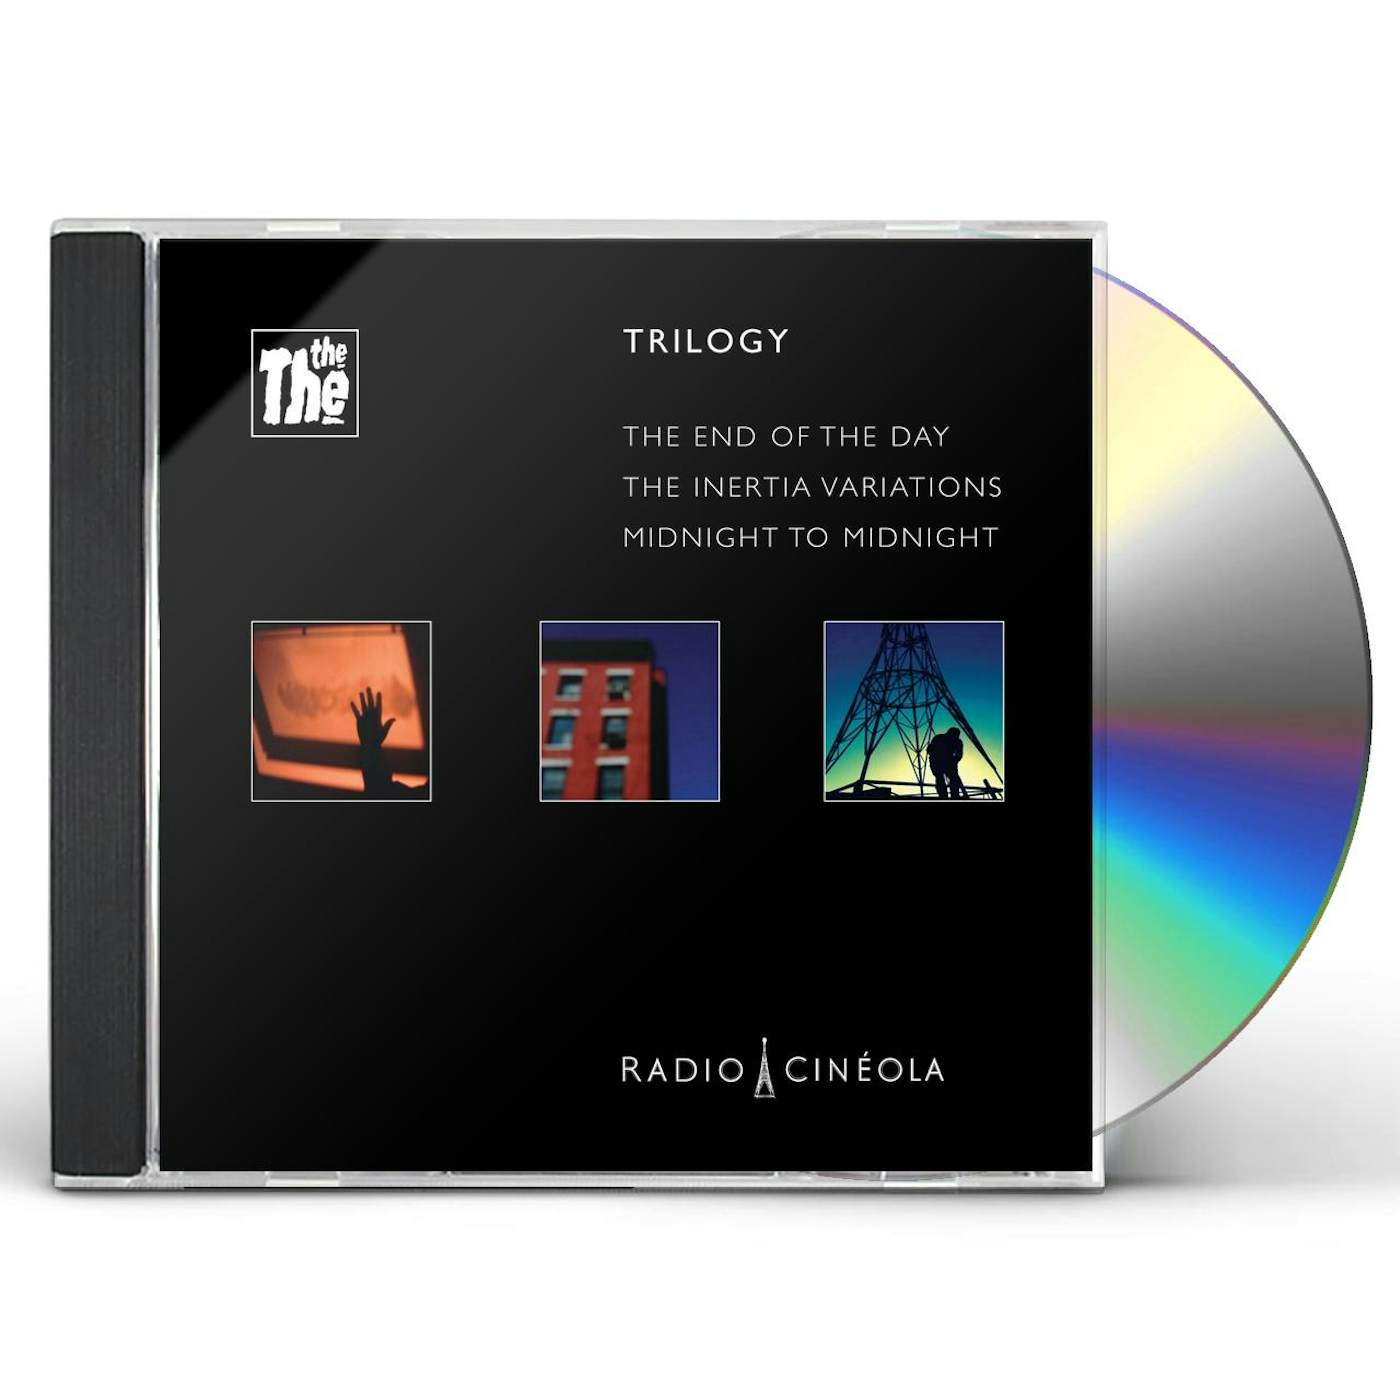 The The RADIO CINEOLA: TRILOGY CD